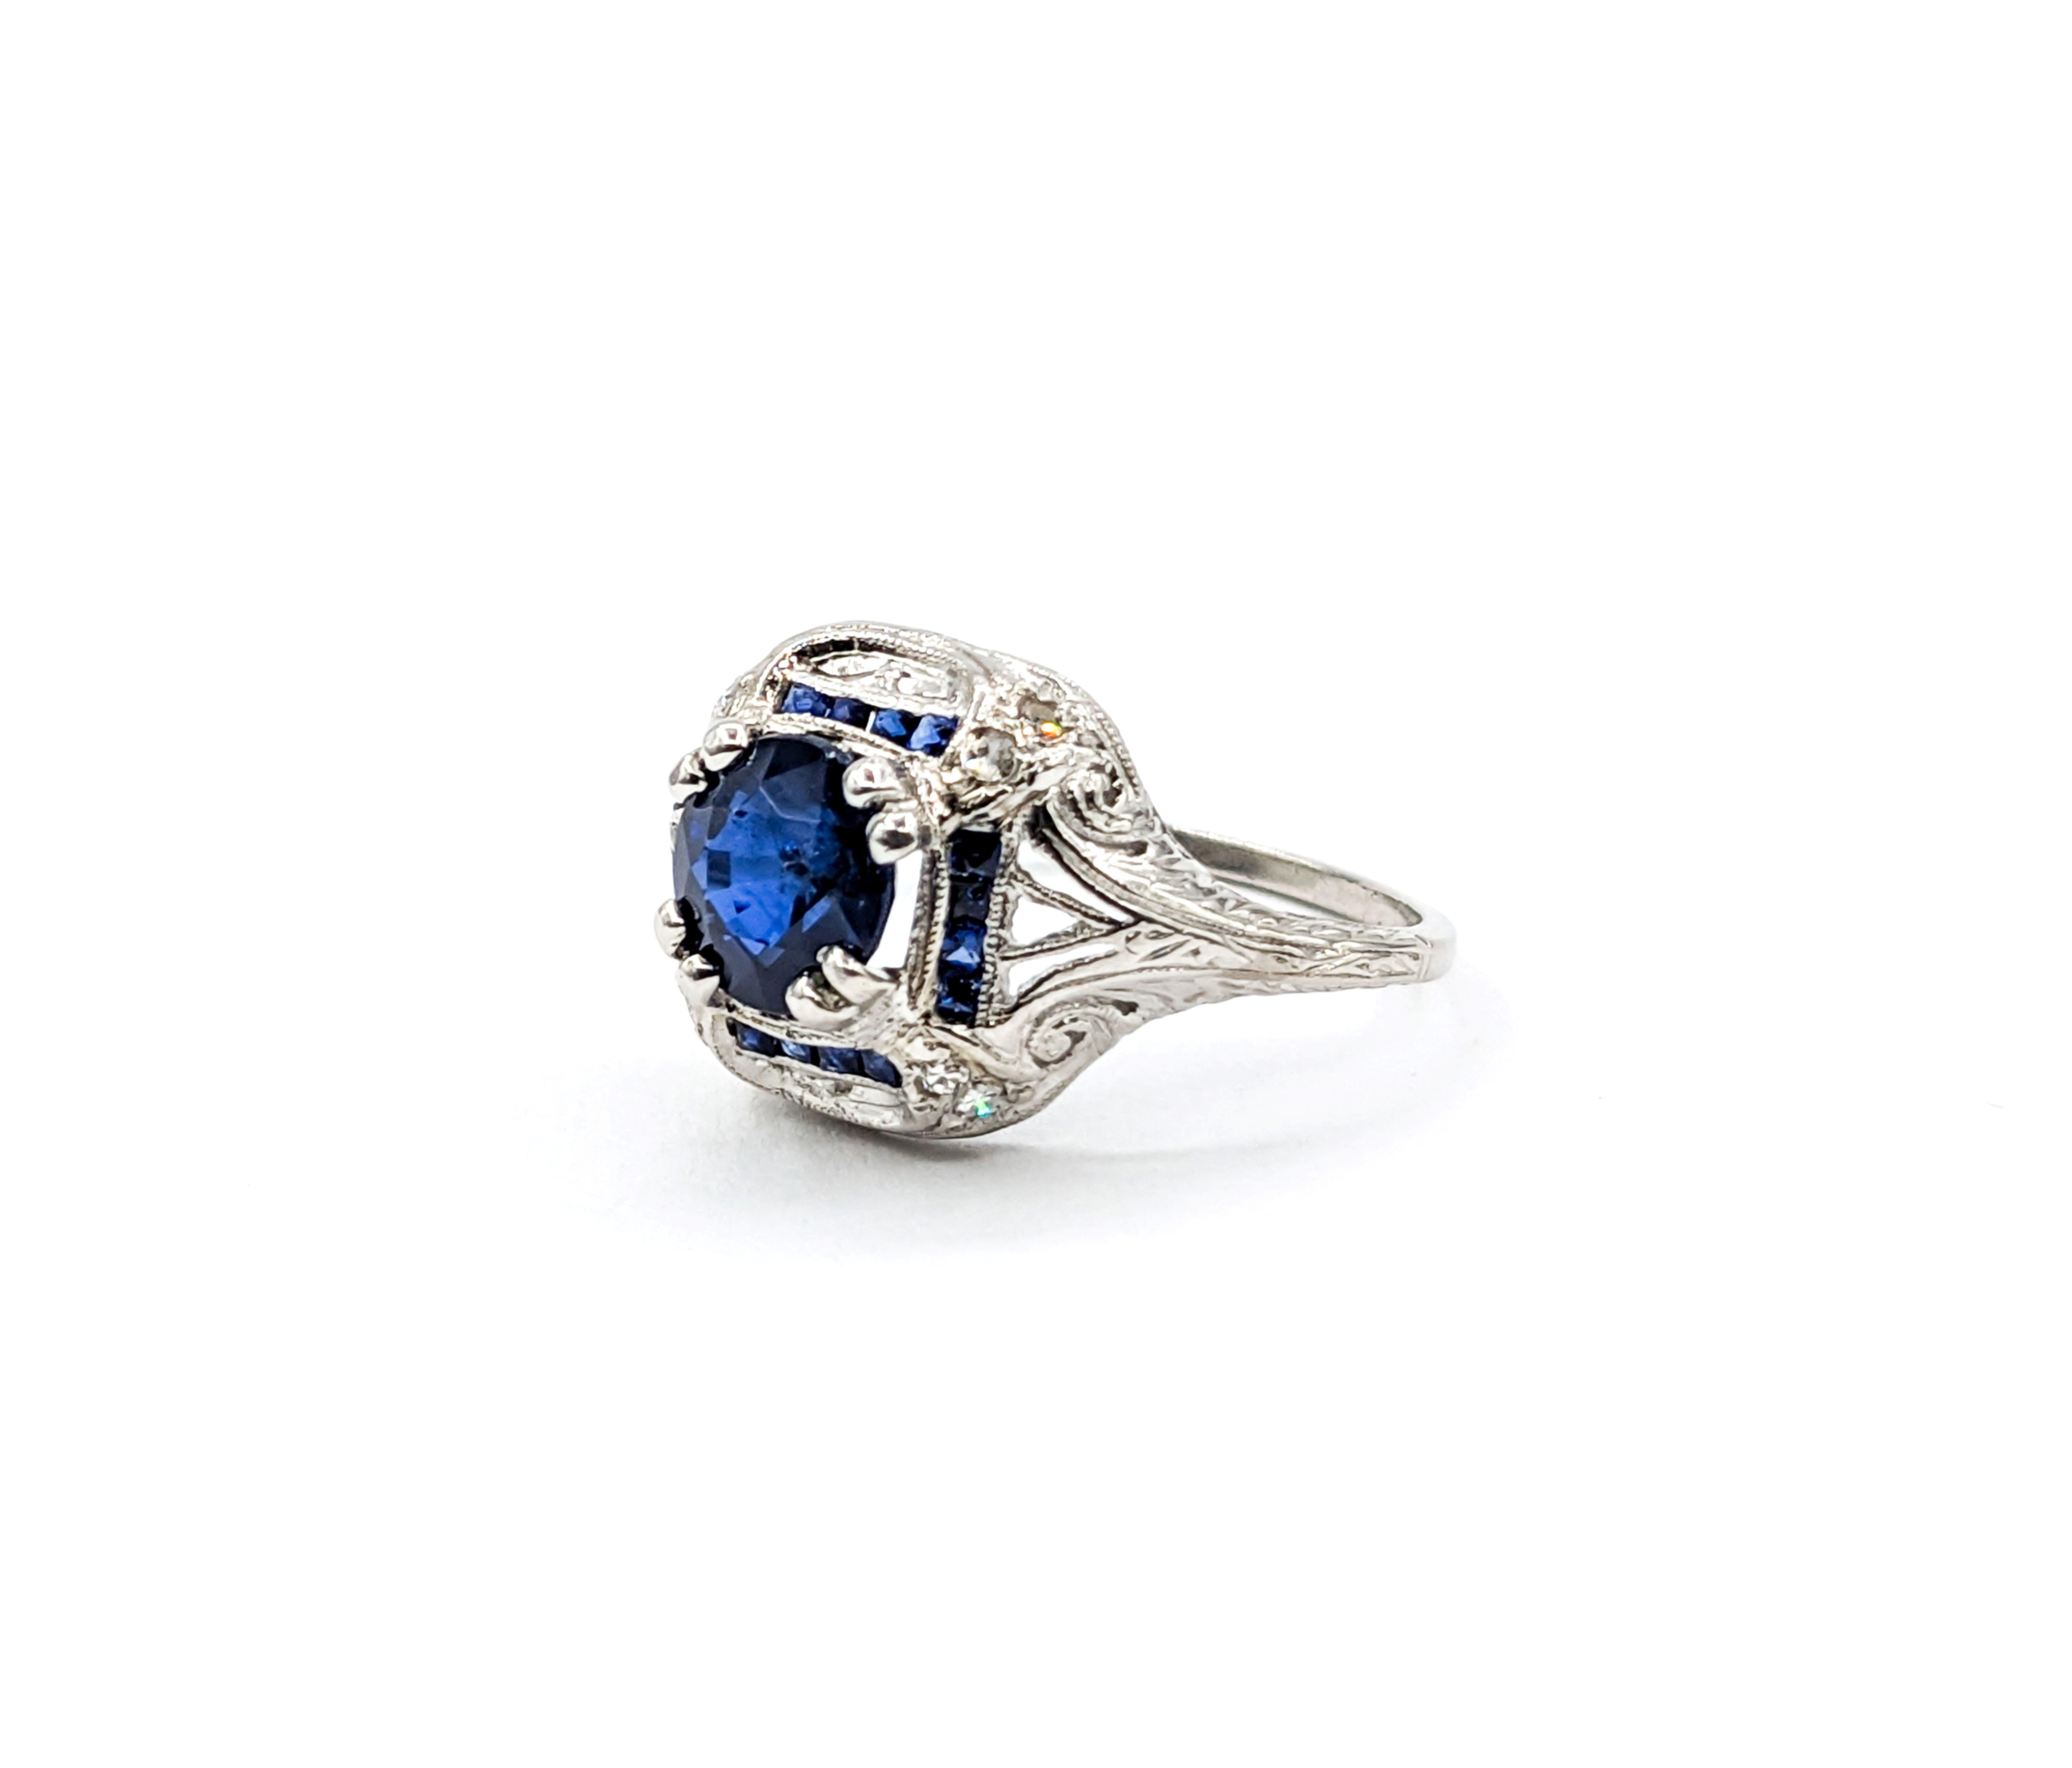 Fantastic Antique Art Deco Ring with Sapphire and Diamonds in Platinum Filigree 1